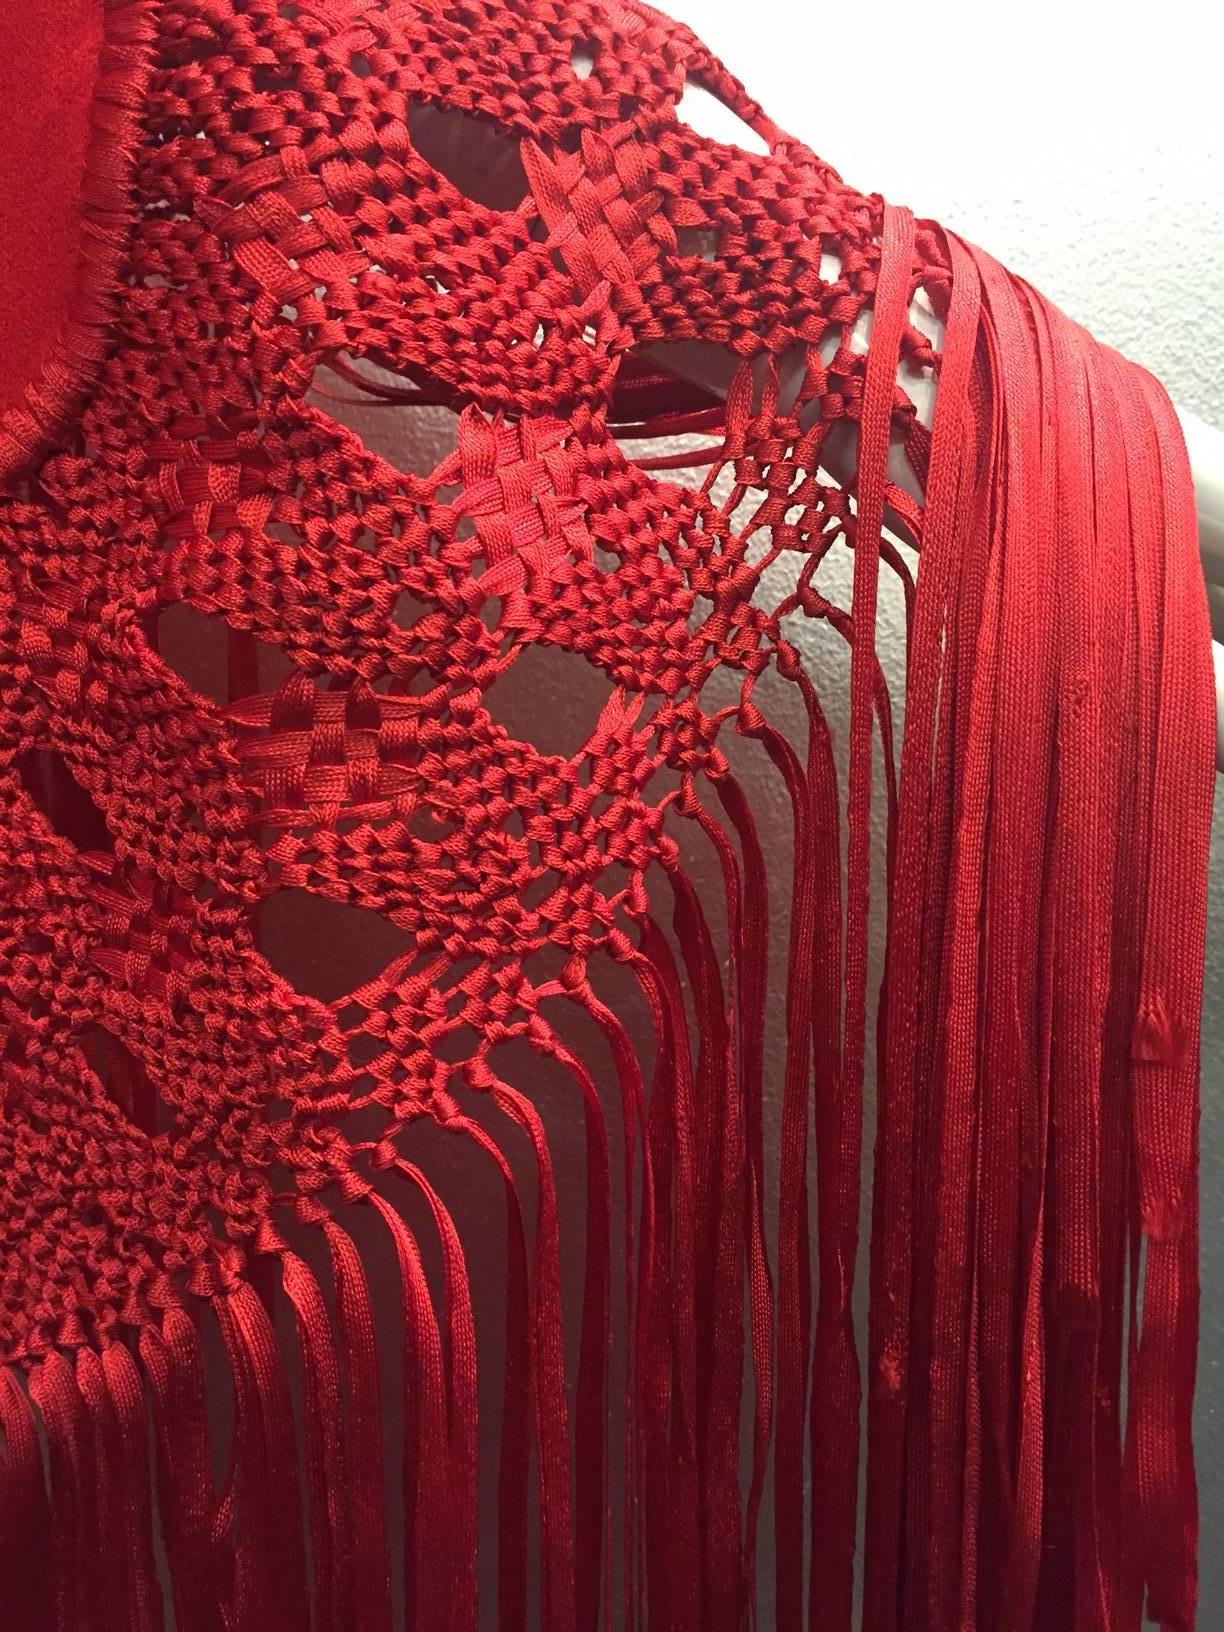 1970s Stunning Wool and Ribbon Cardinal Red Macrame Fringed Shawl 2